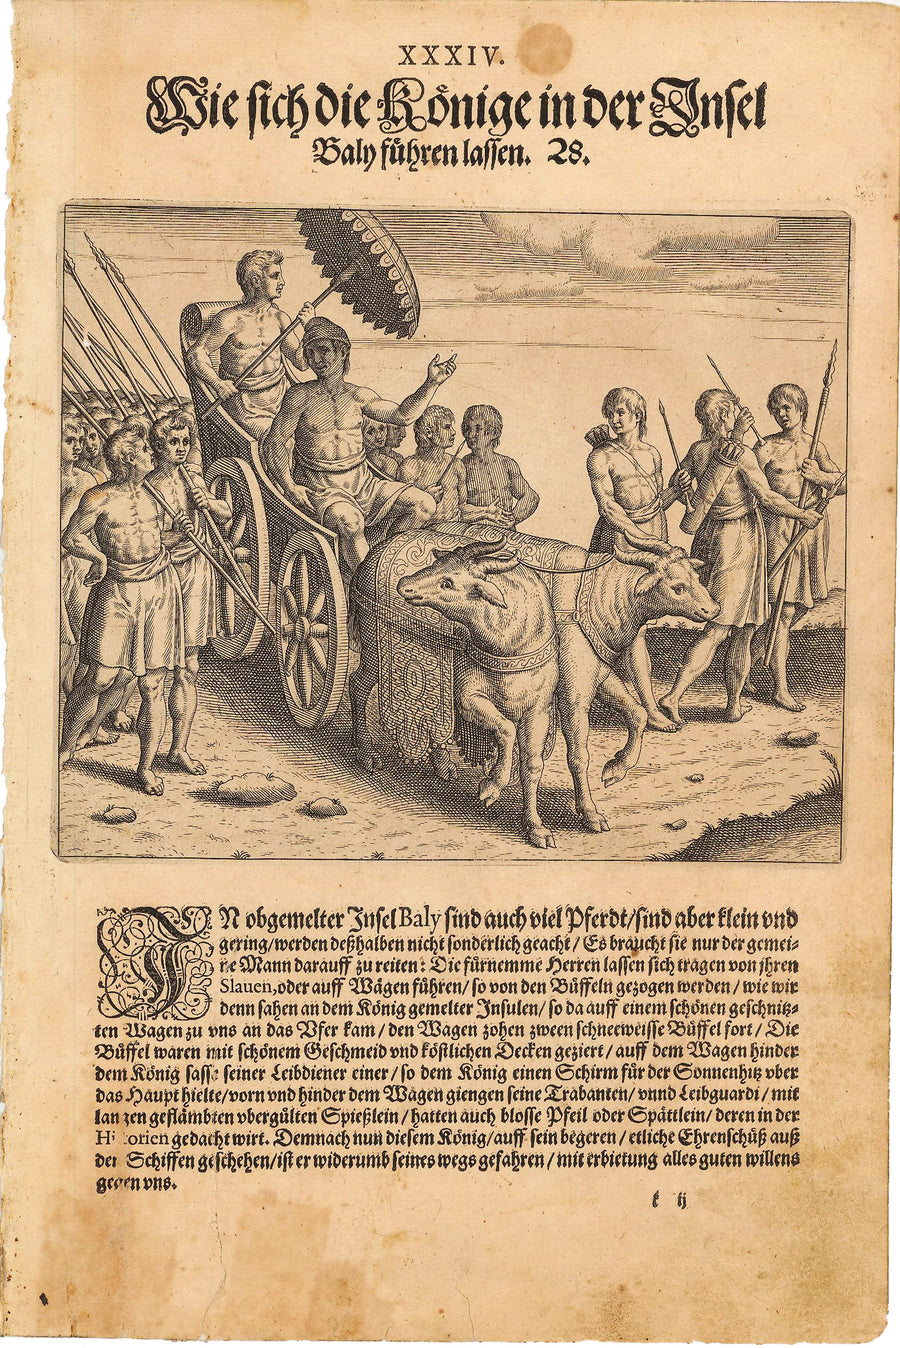 Antique Print of a Native Balinese Royal Procession - de Bry, 1599